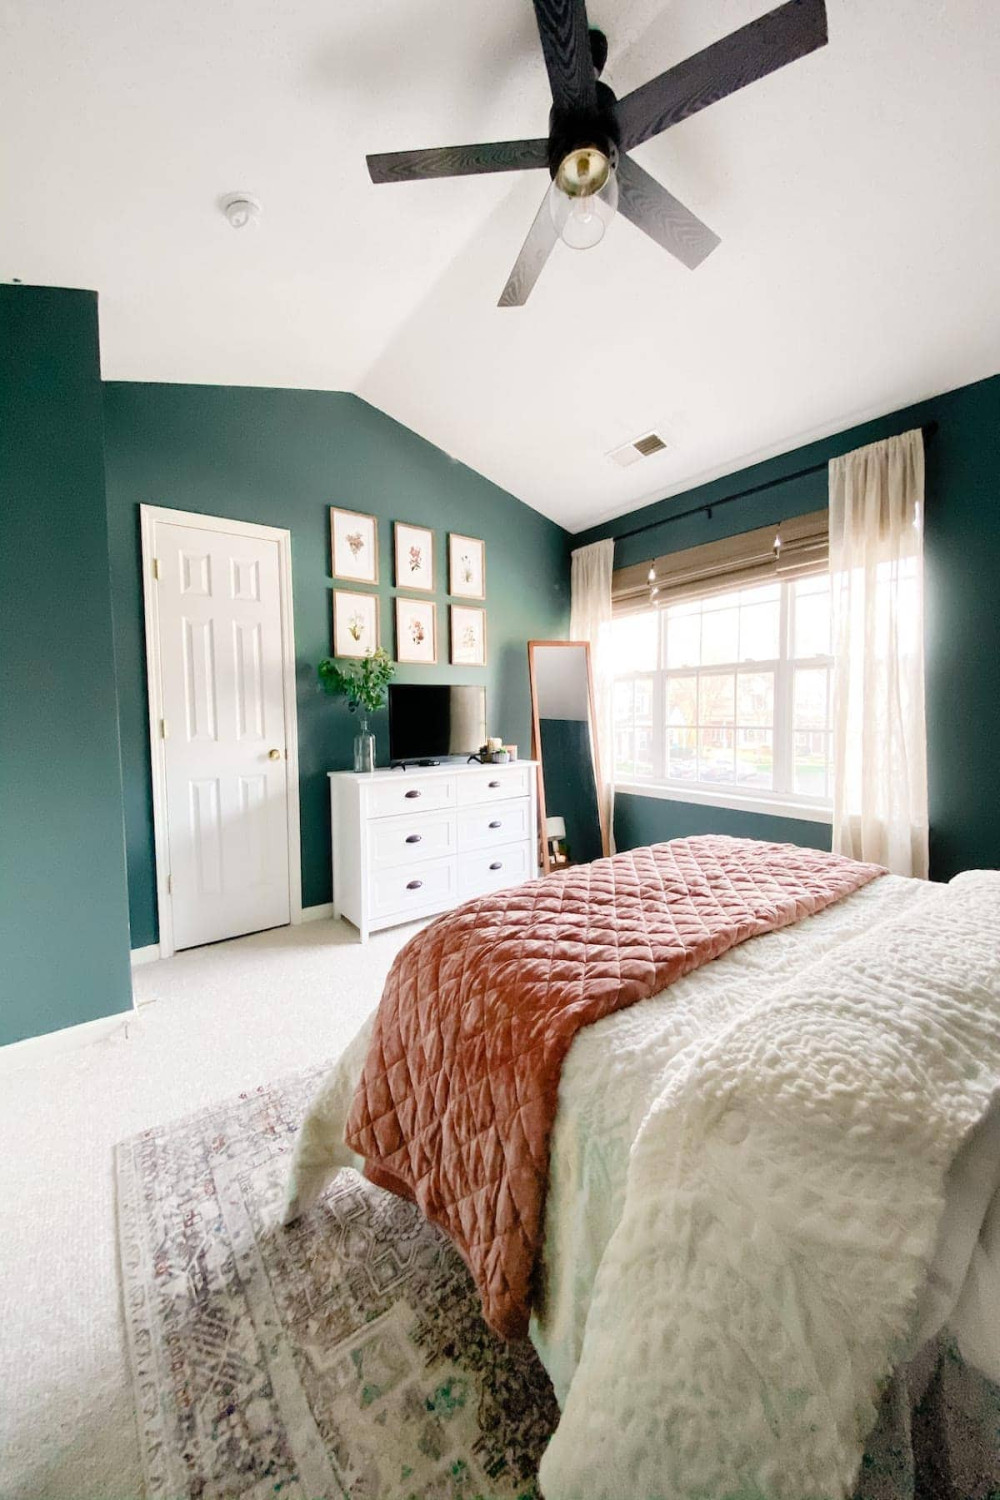 Bedroom Decor Ideas That Feel Like a Spa Retreat - Bless